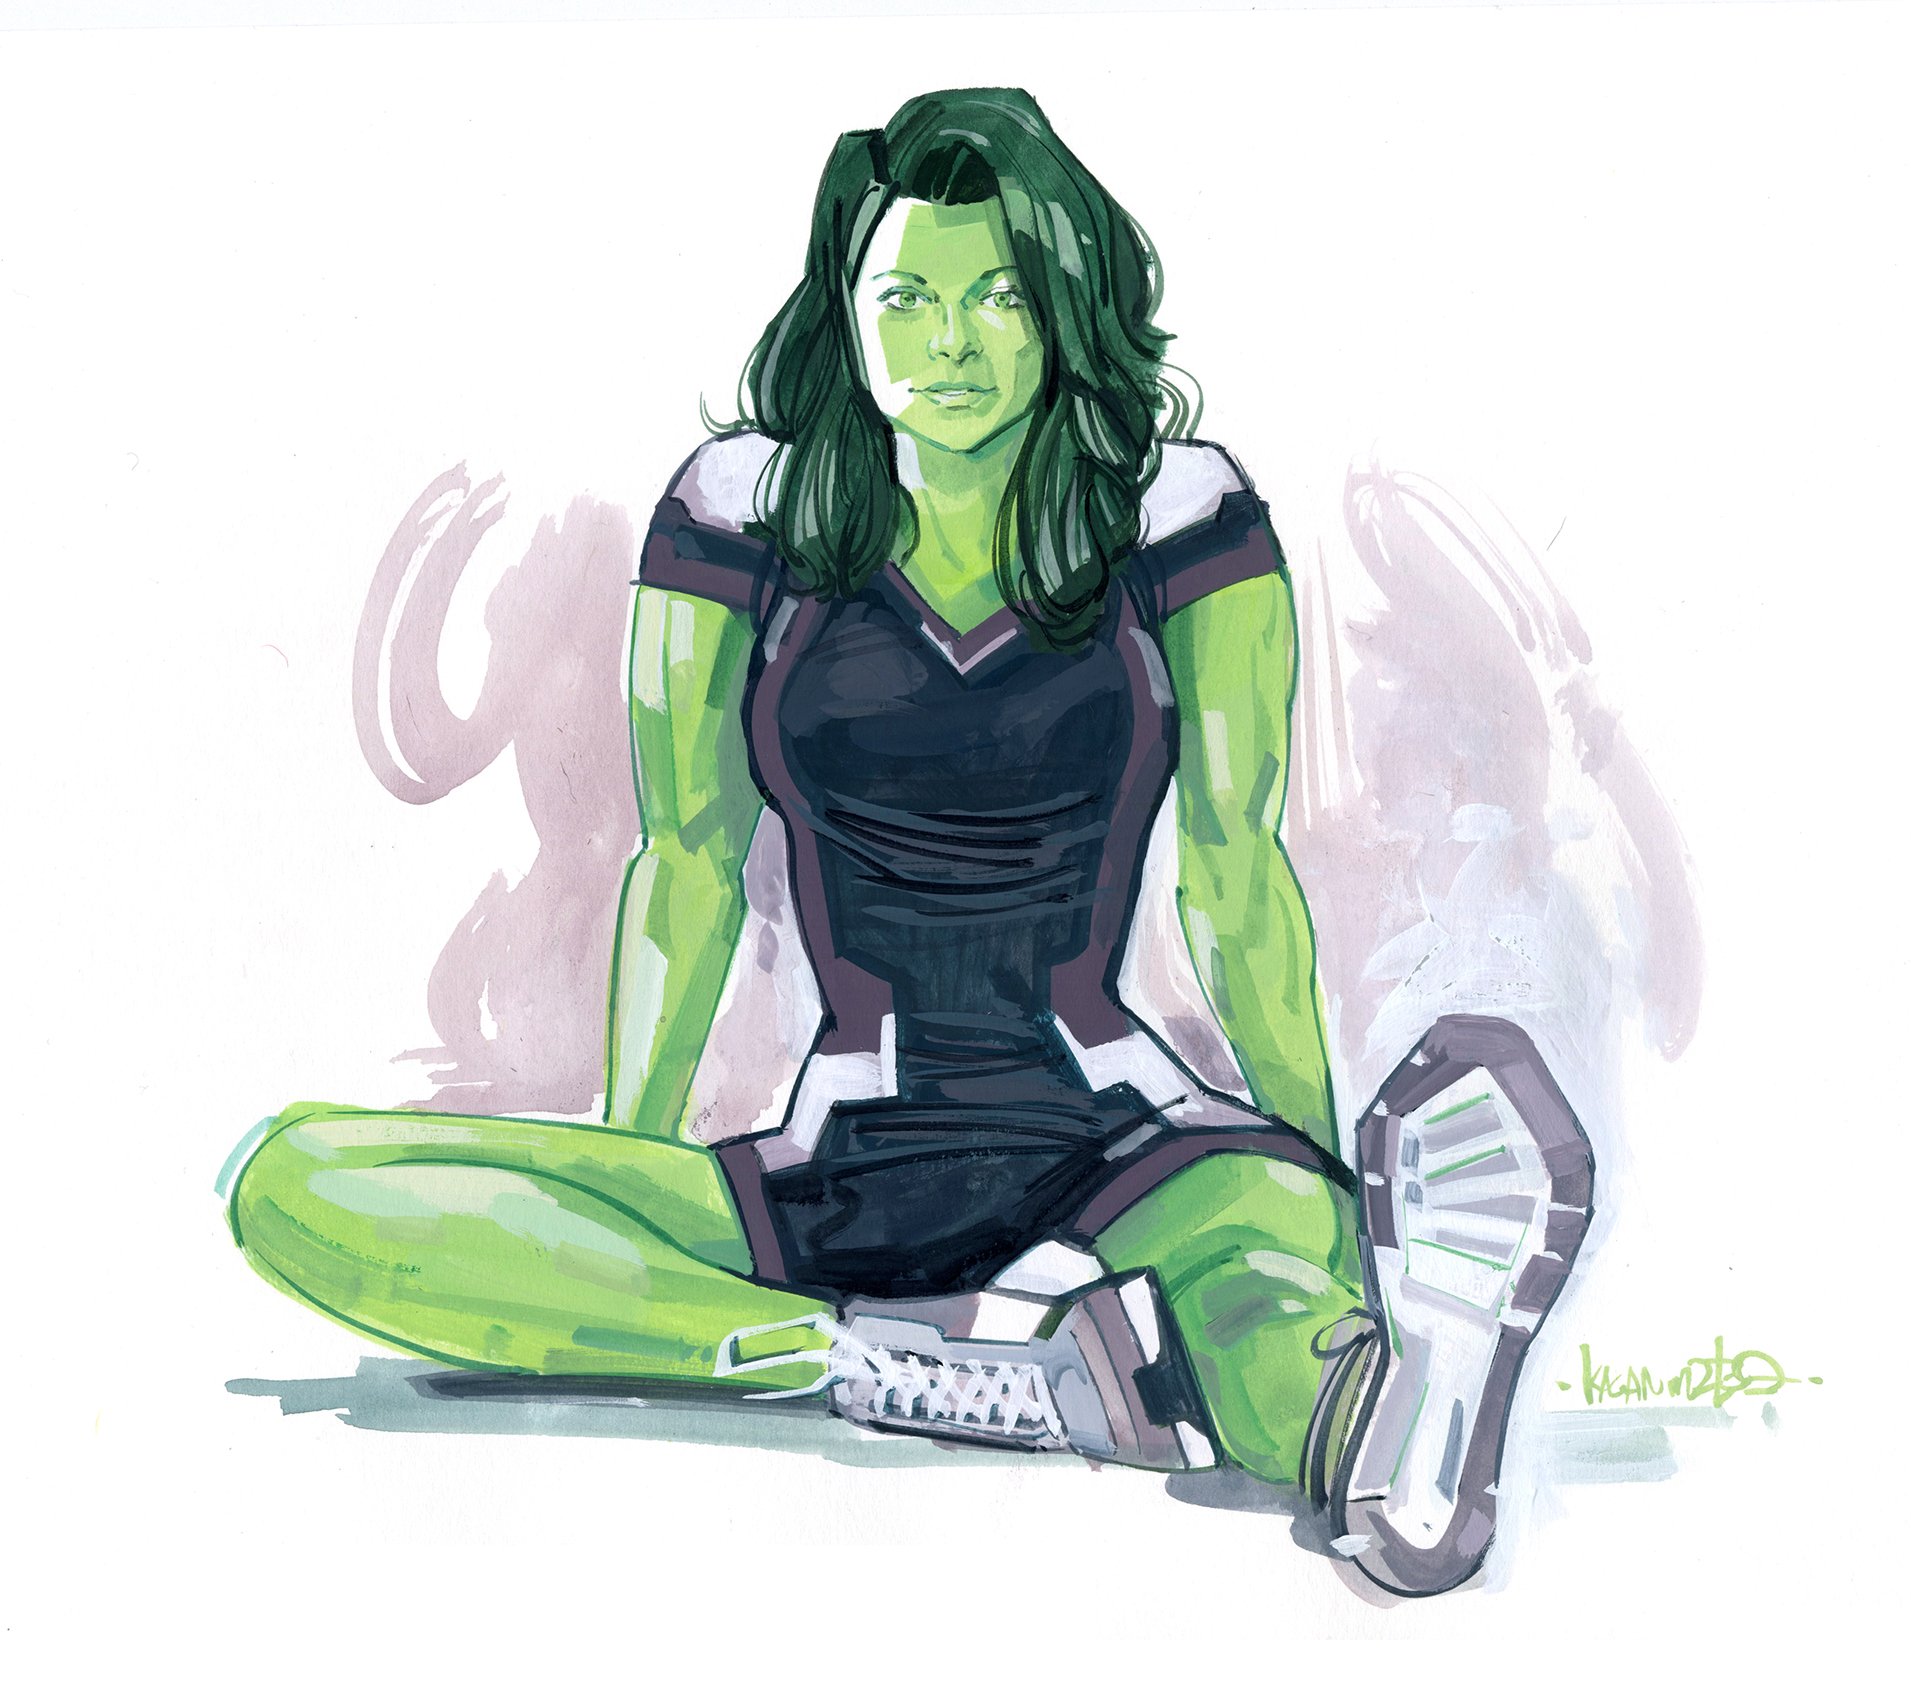 She Hulk / Private commission